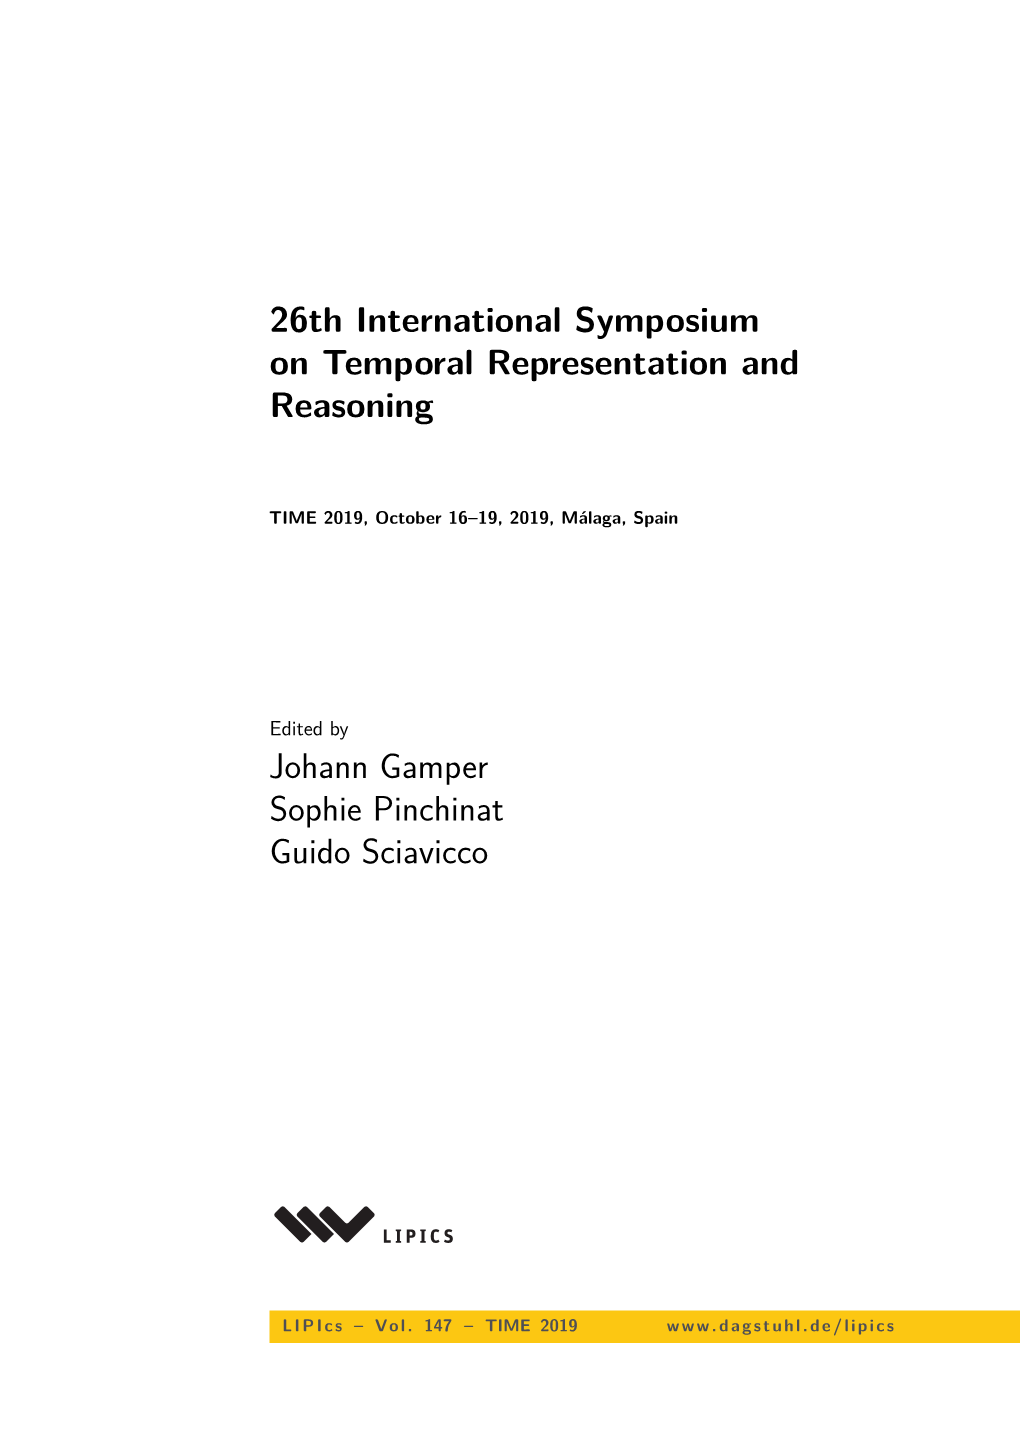 26Th International Symposium on Temporal Representation and Reasoning